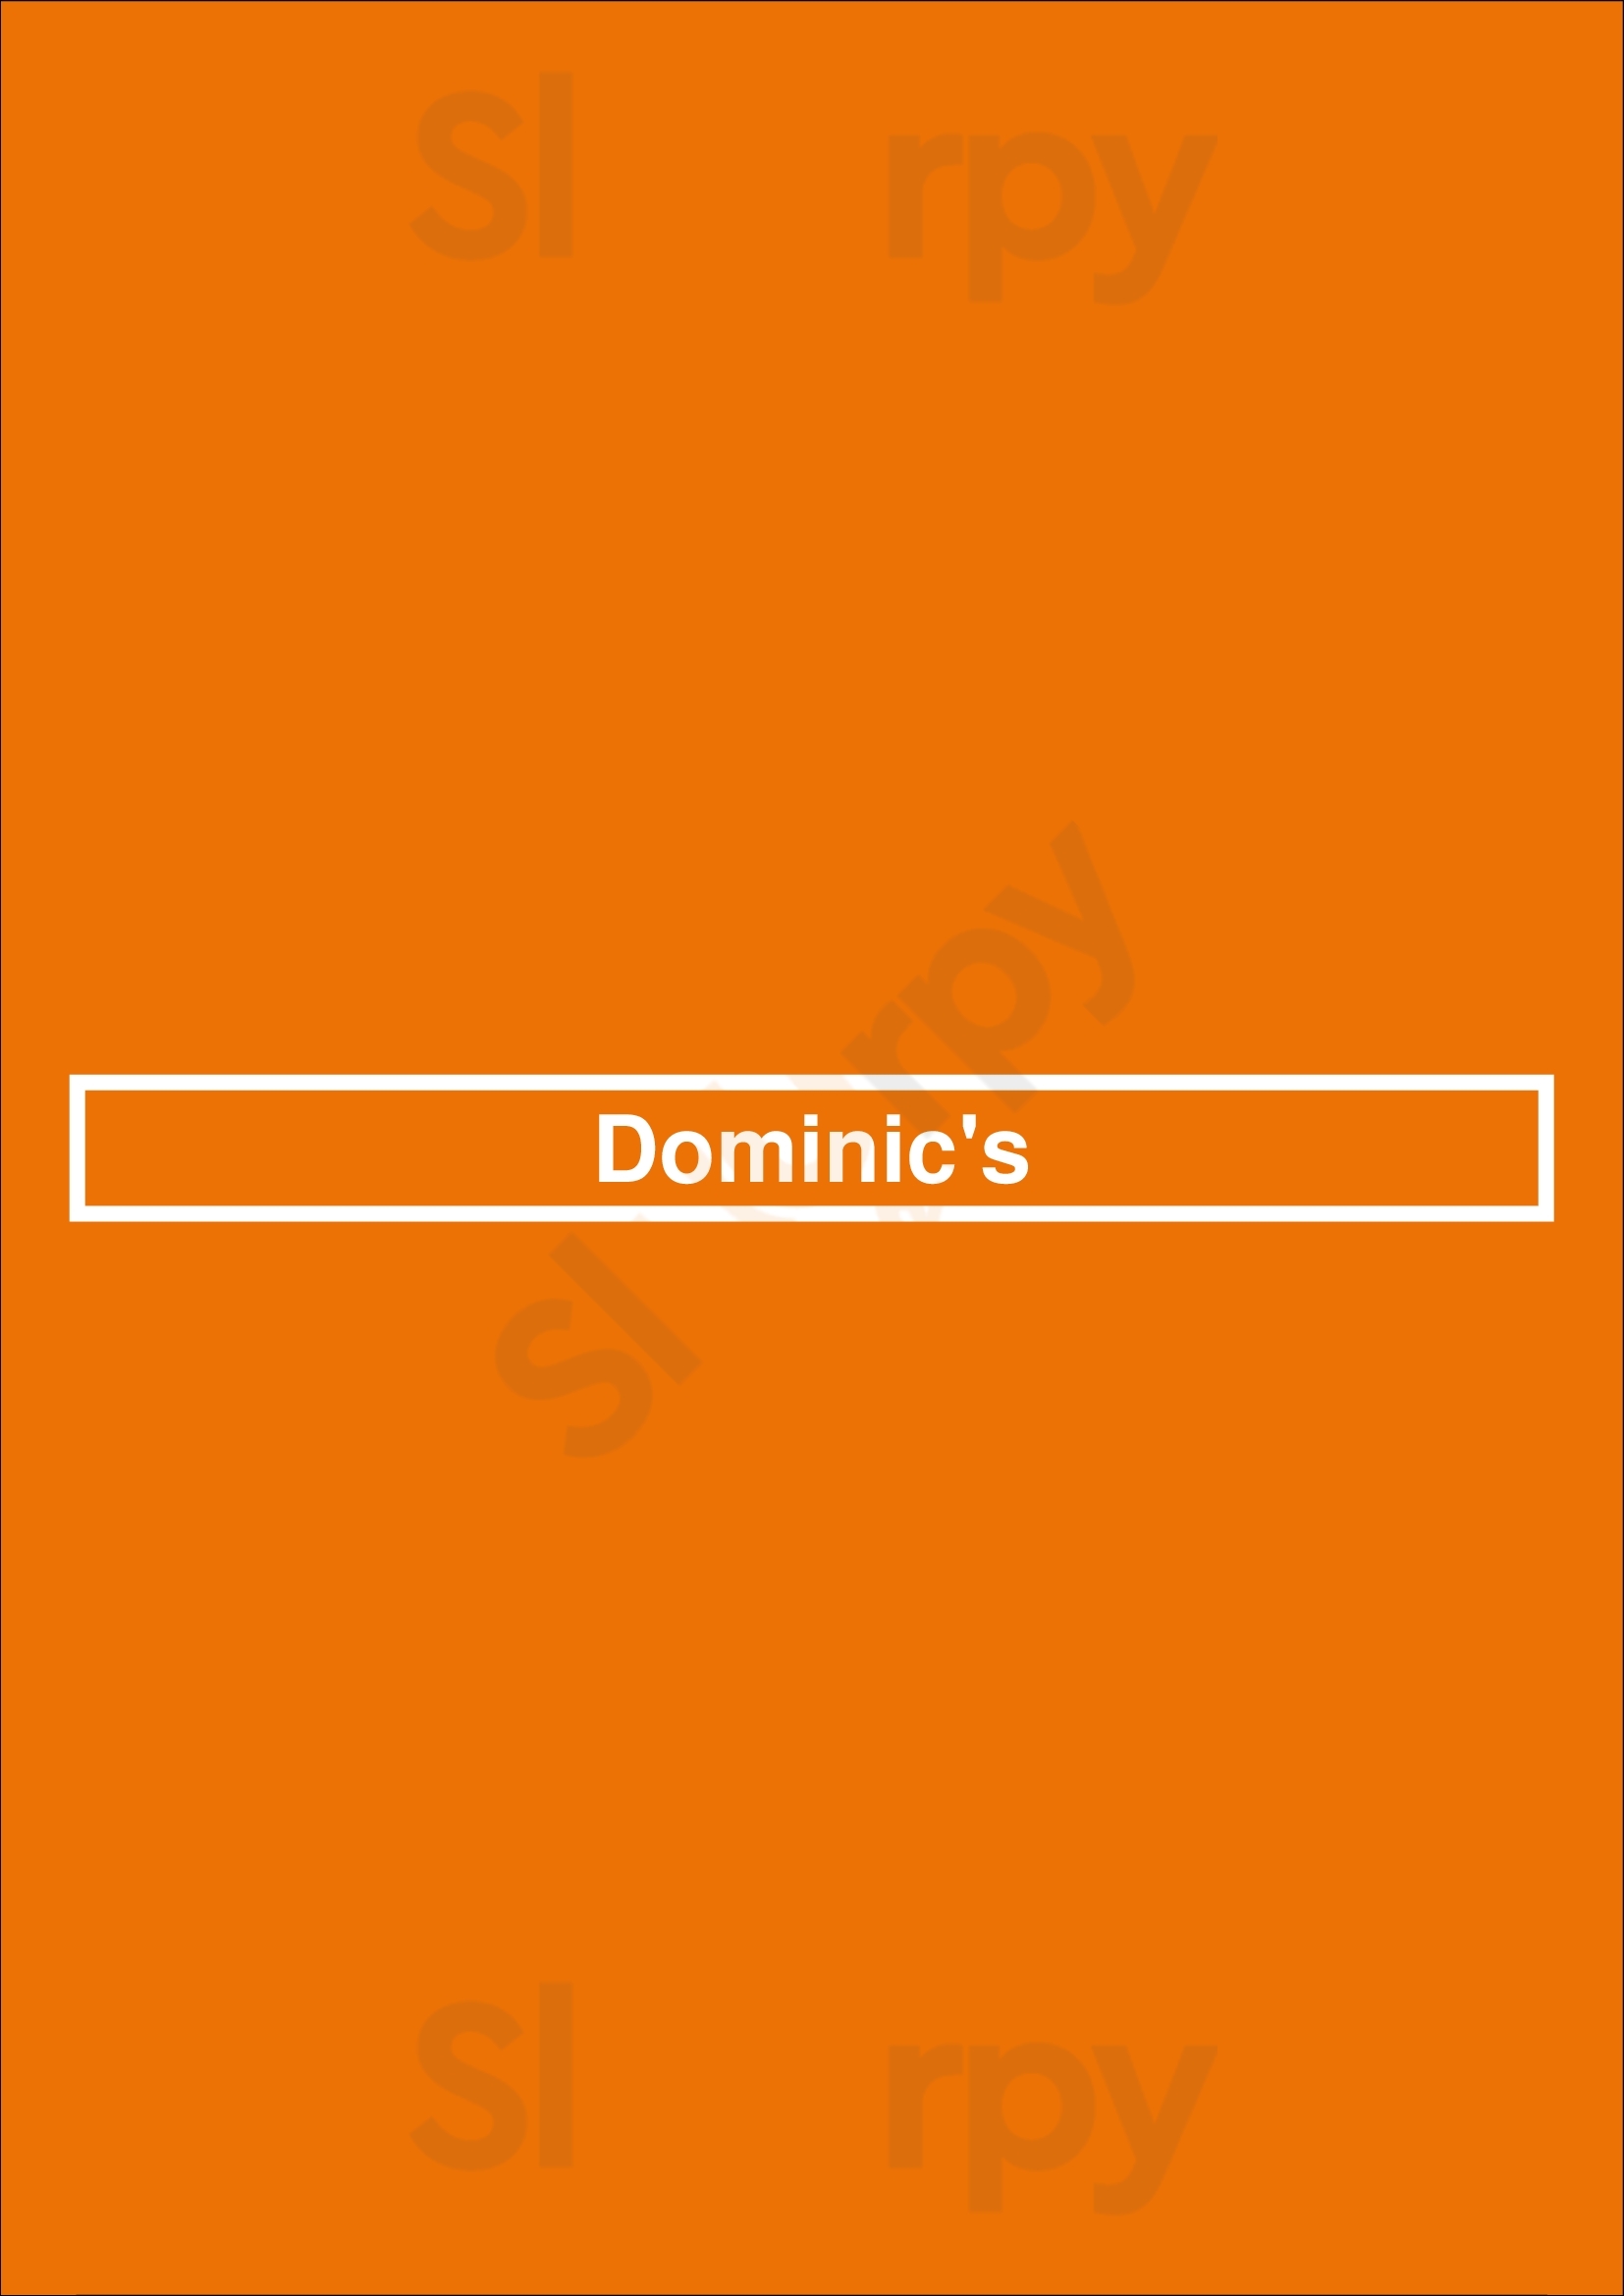 Dominic's Saint Louis Menu - 1